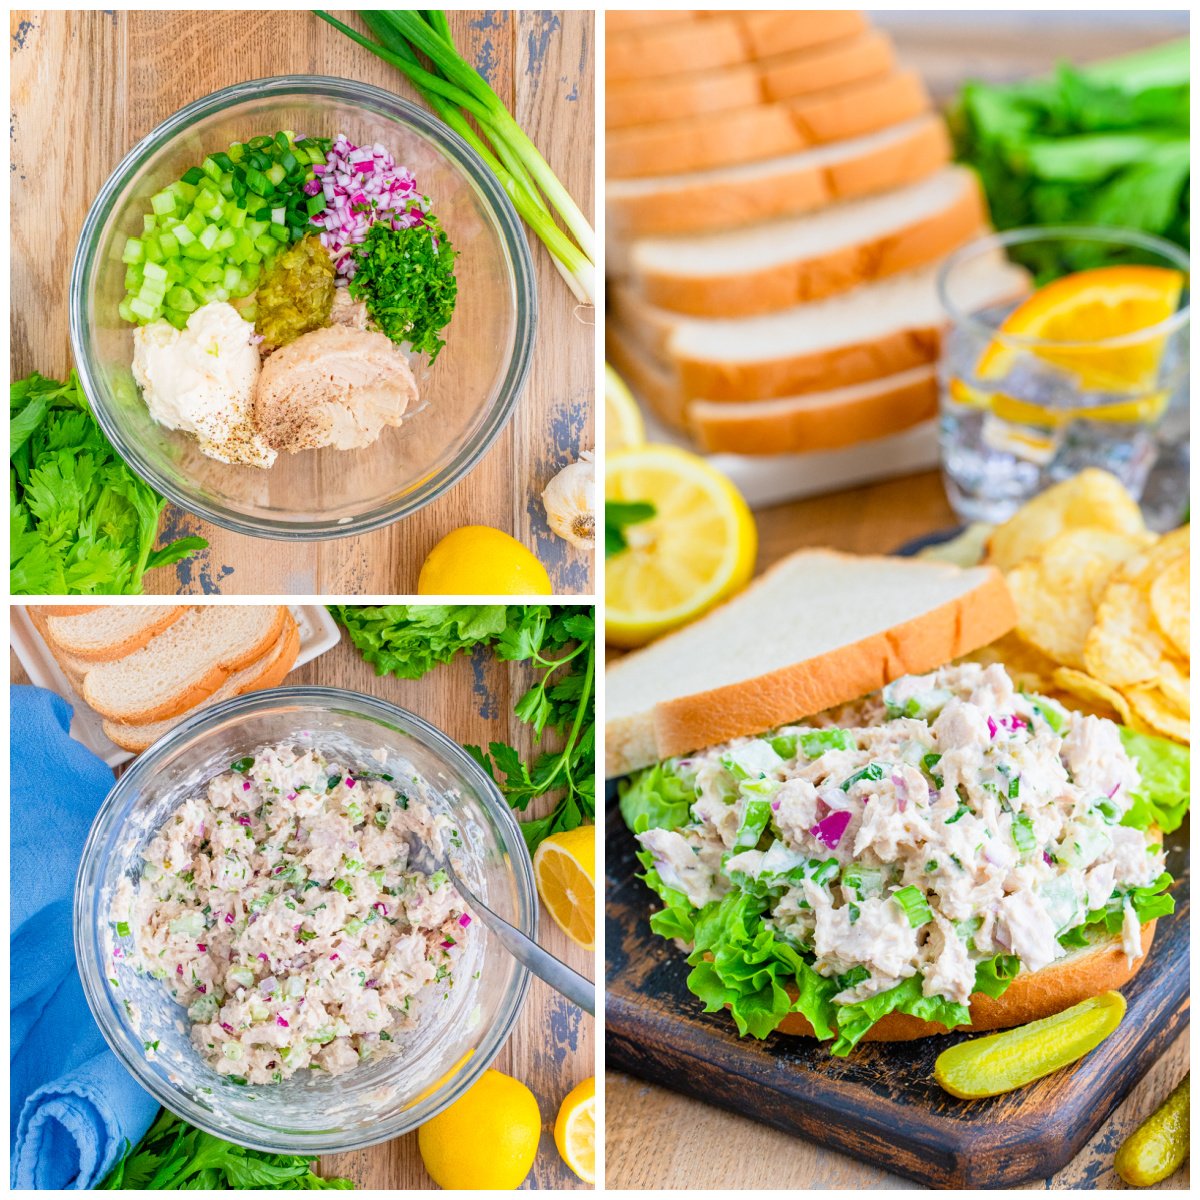 Step by step photos on how to make a Tuna Salad Sandwich